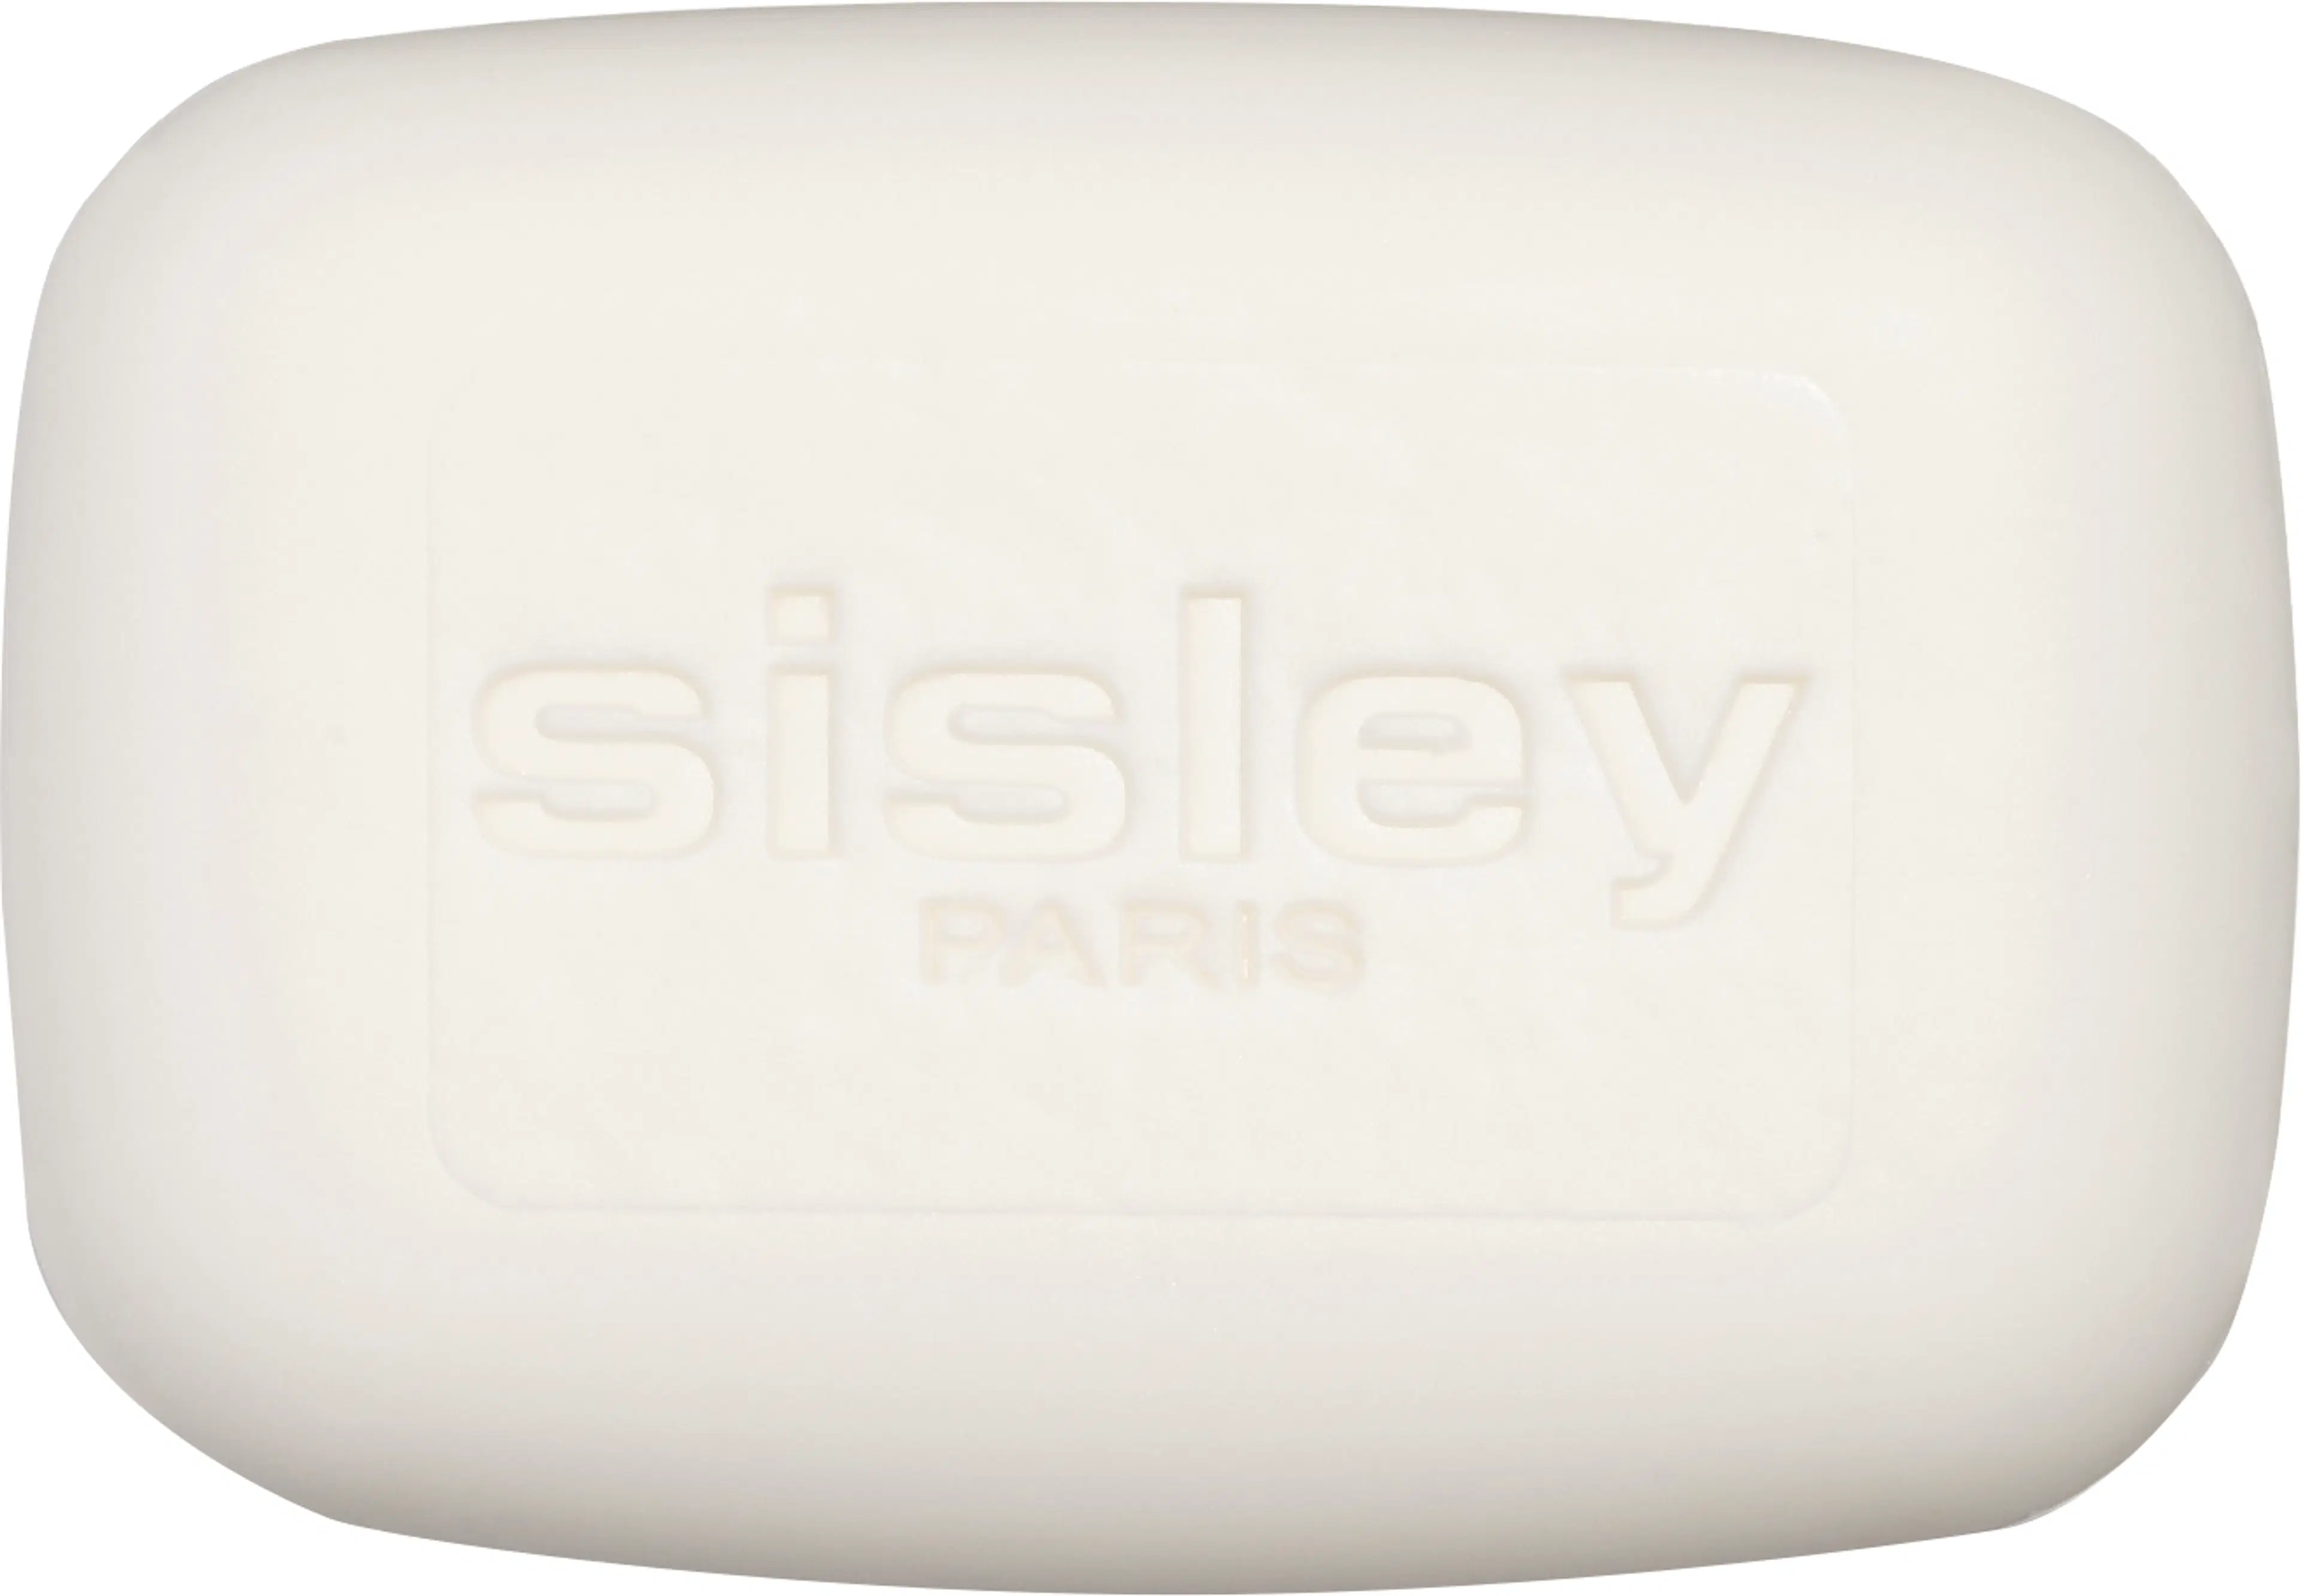 Sisley Soapless Facial Cleansing Bar kasvosaippua 125 g